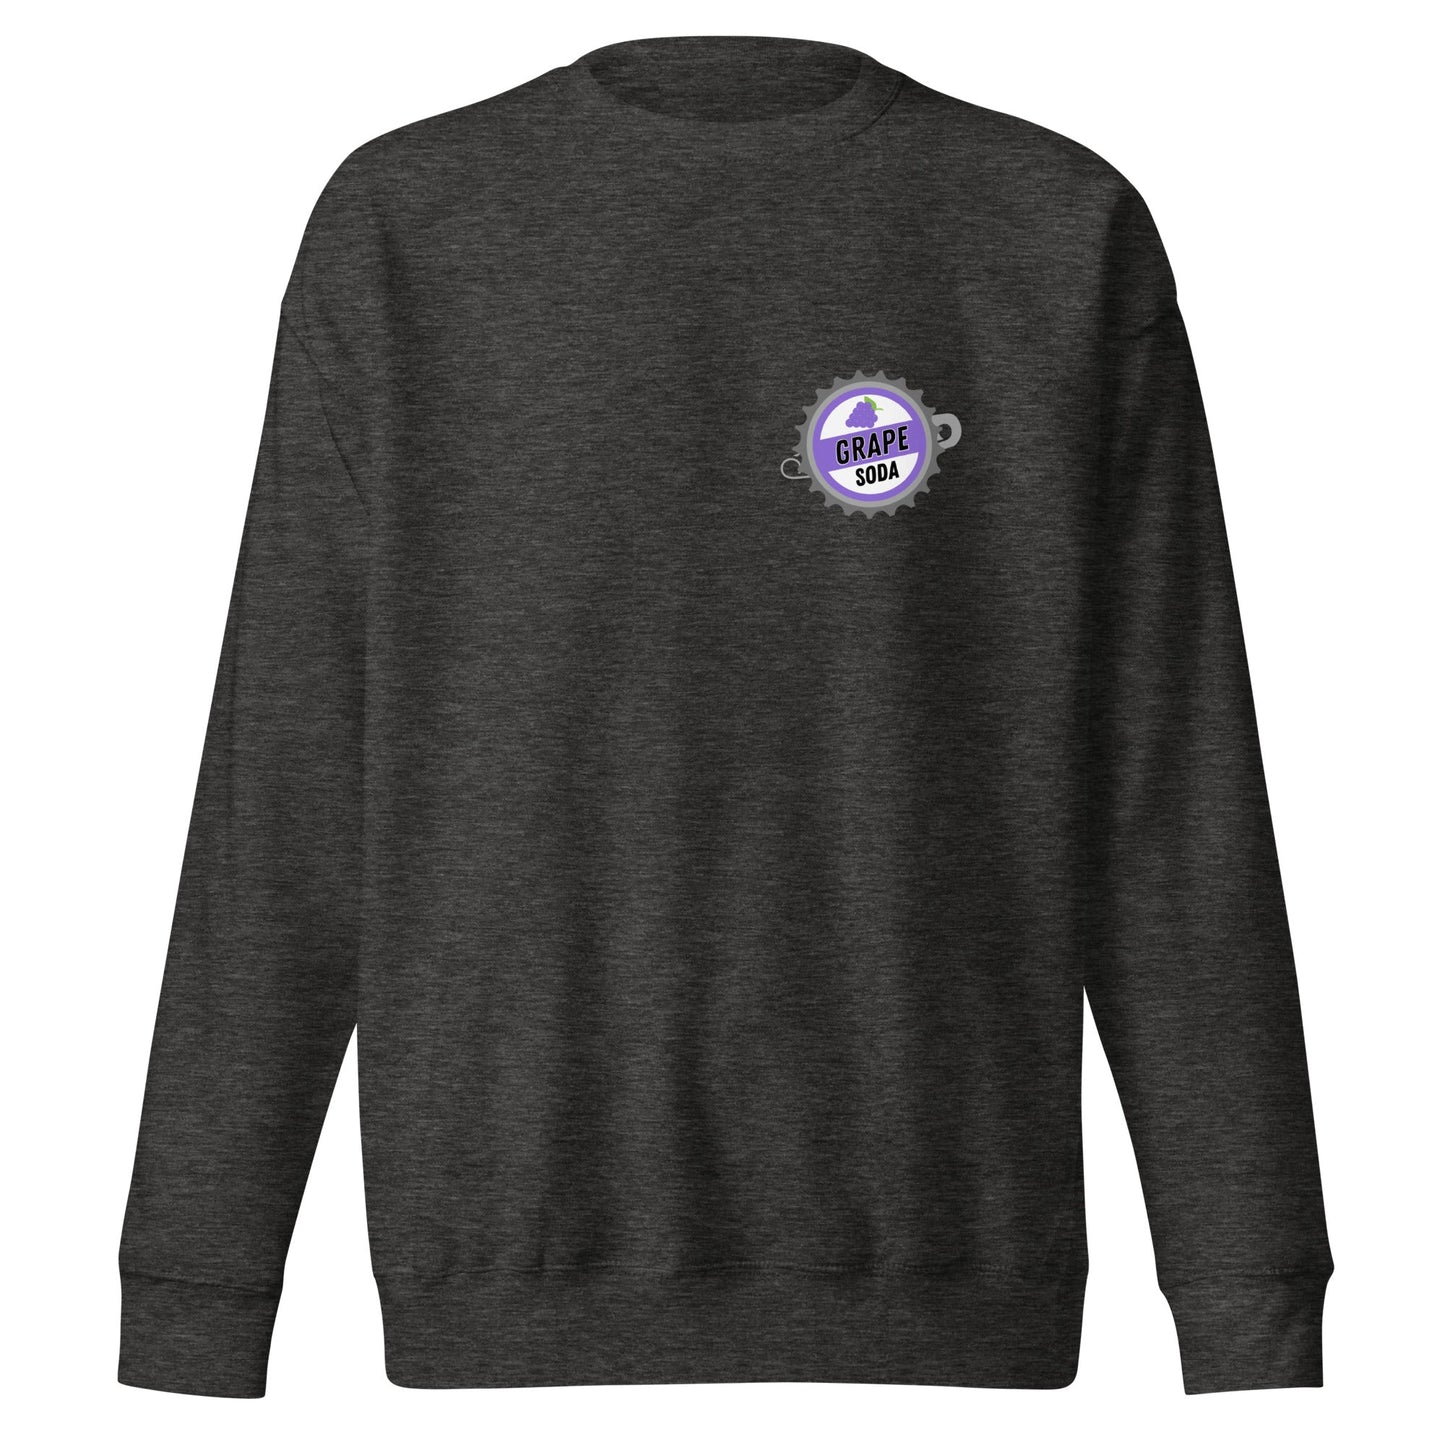 Grape Soda Unisex Premium Sweatshirt 100 years of wonderdisney giftdisney gifts#tag4##tag5##tag6#